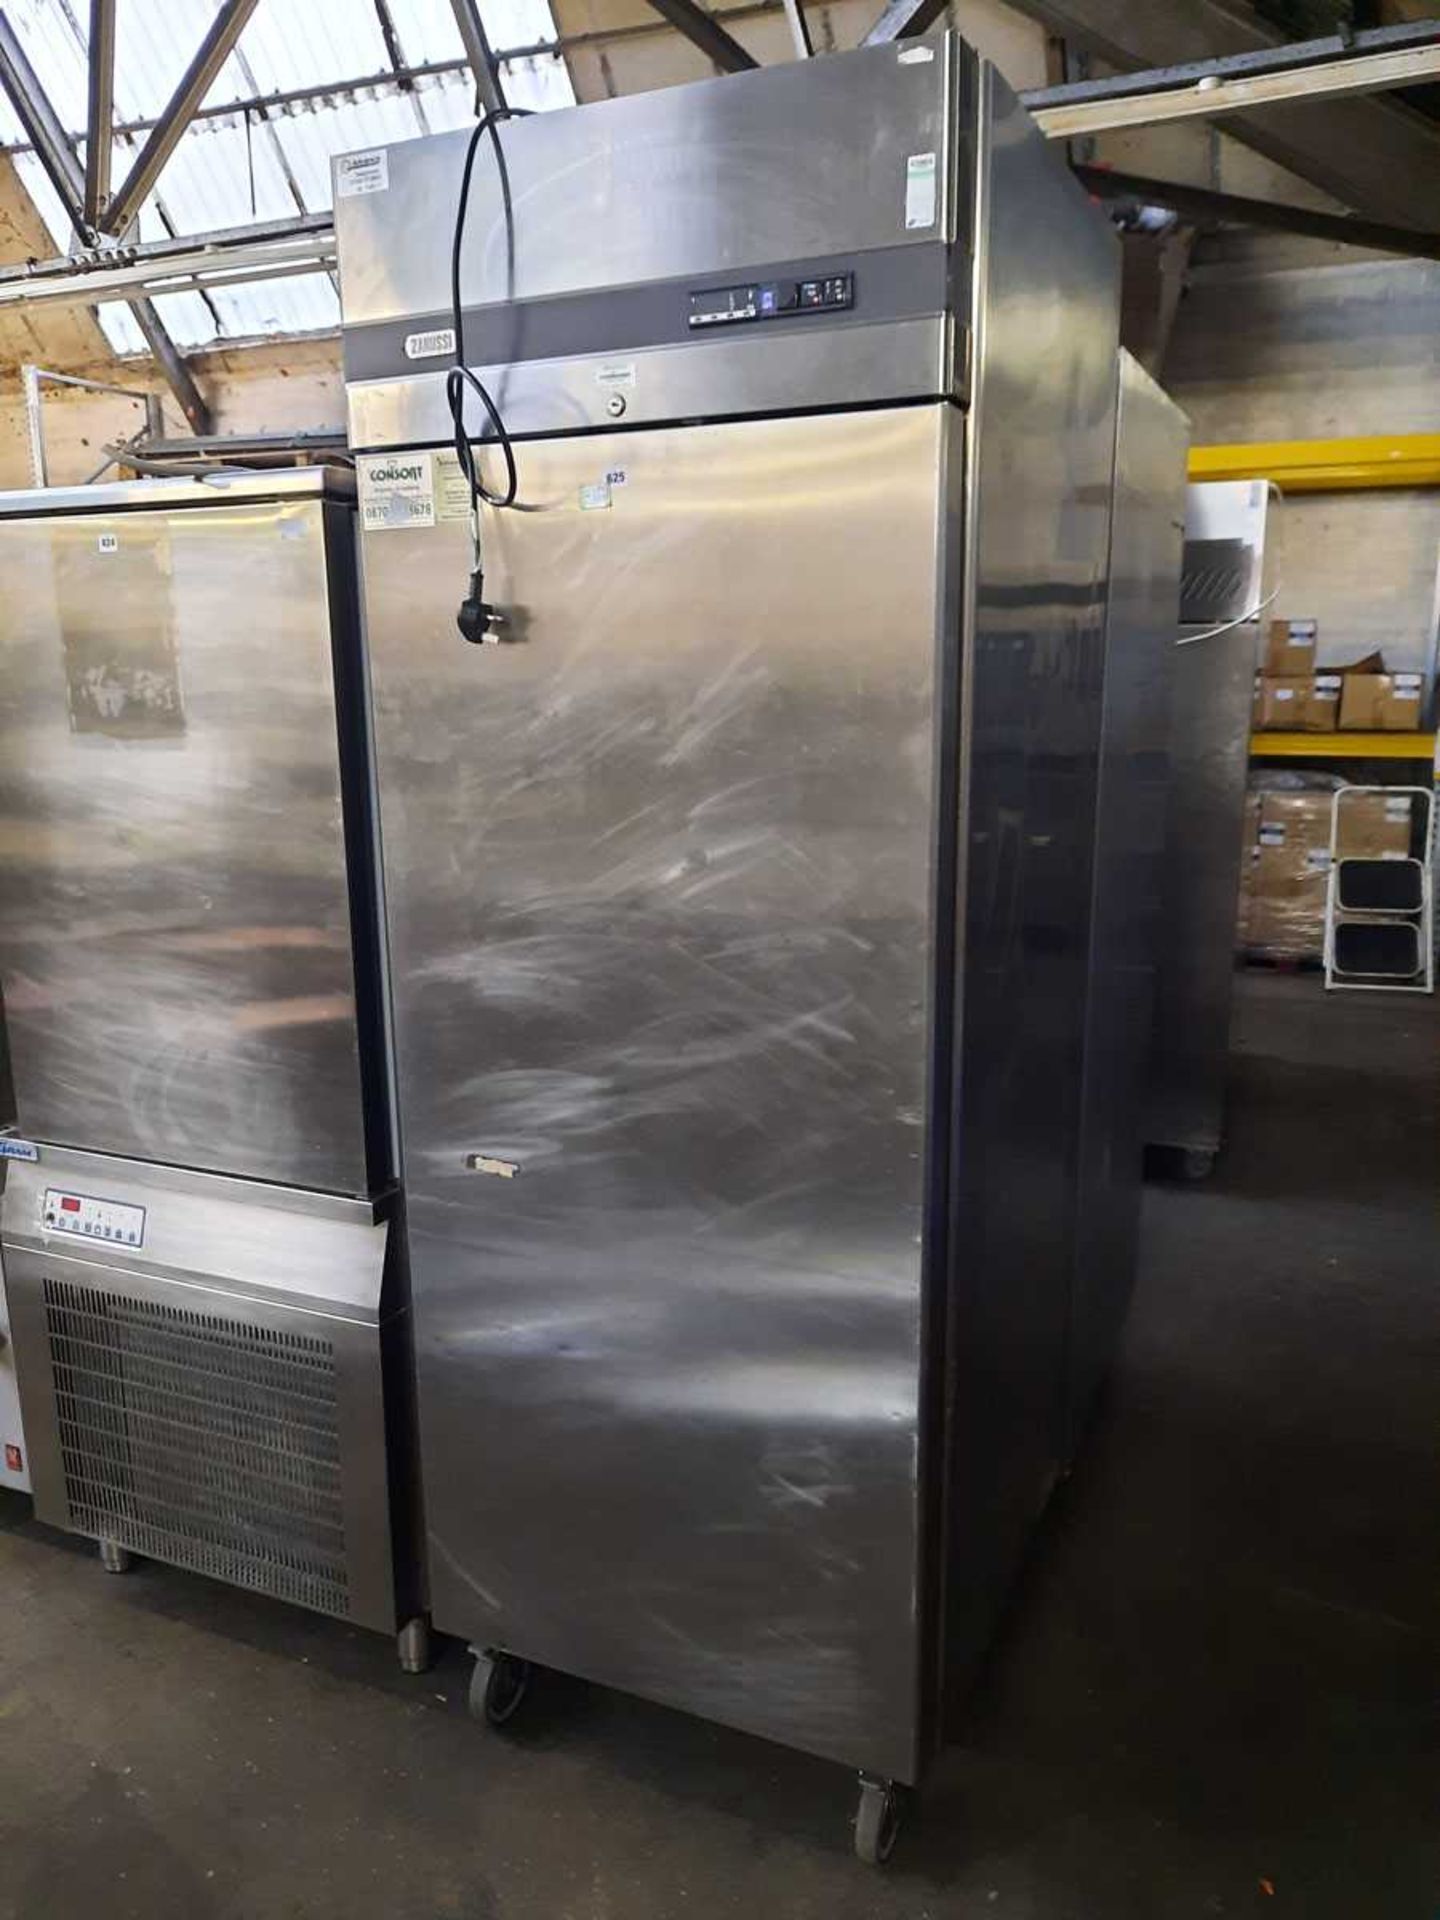 75cm Zanussi single door fridge